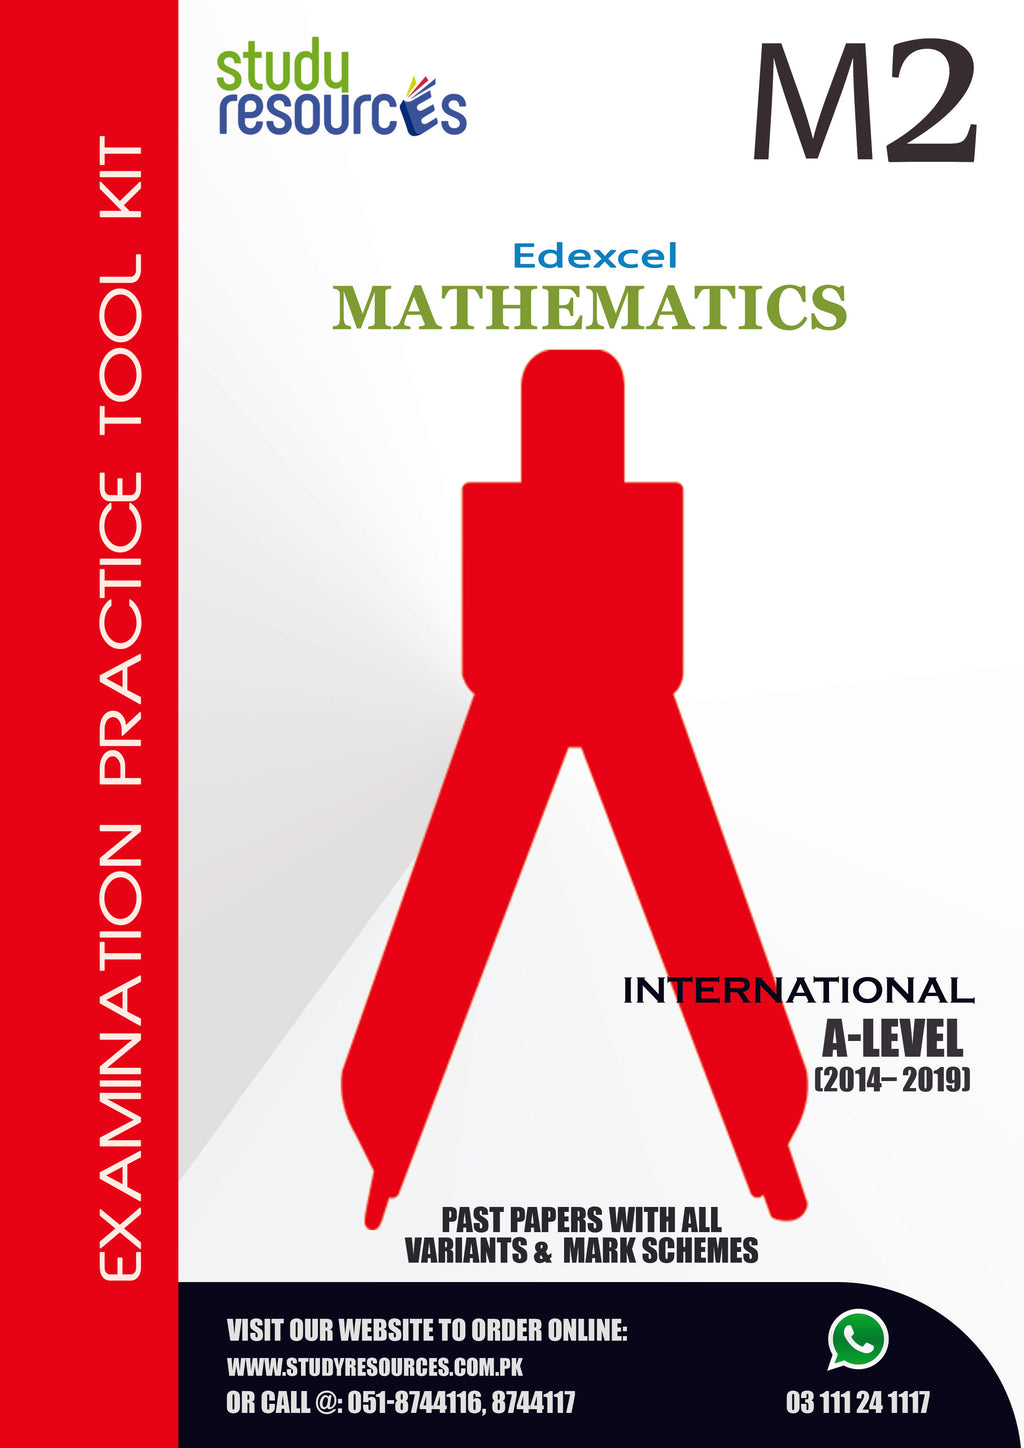 Edexcel A-Level Mathematics M-2 Past Papers (2014-2019)